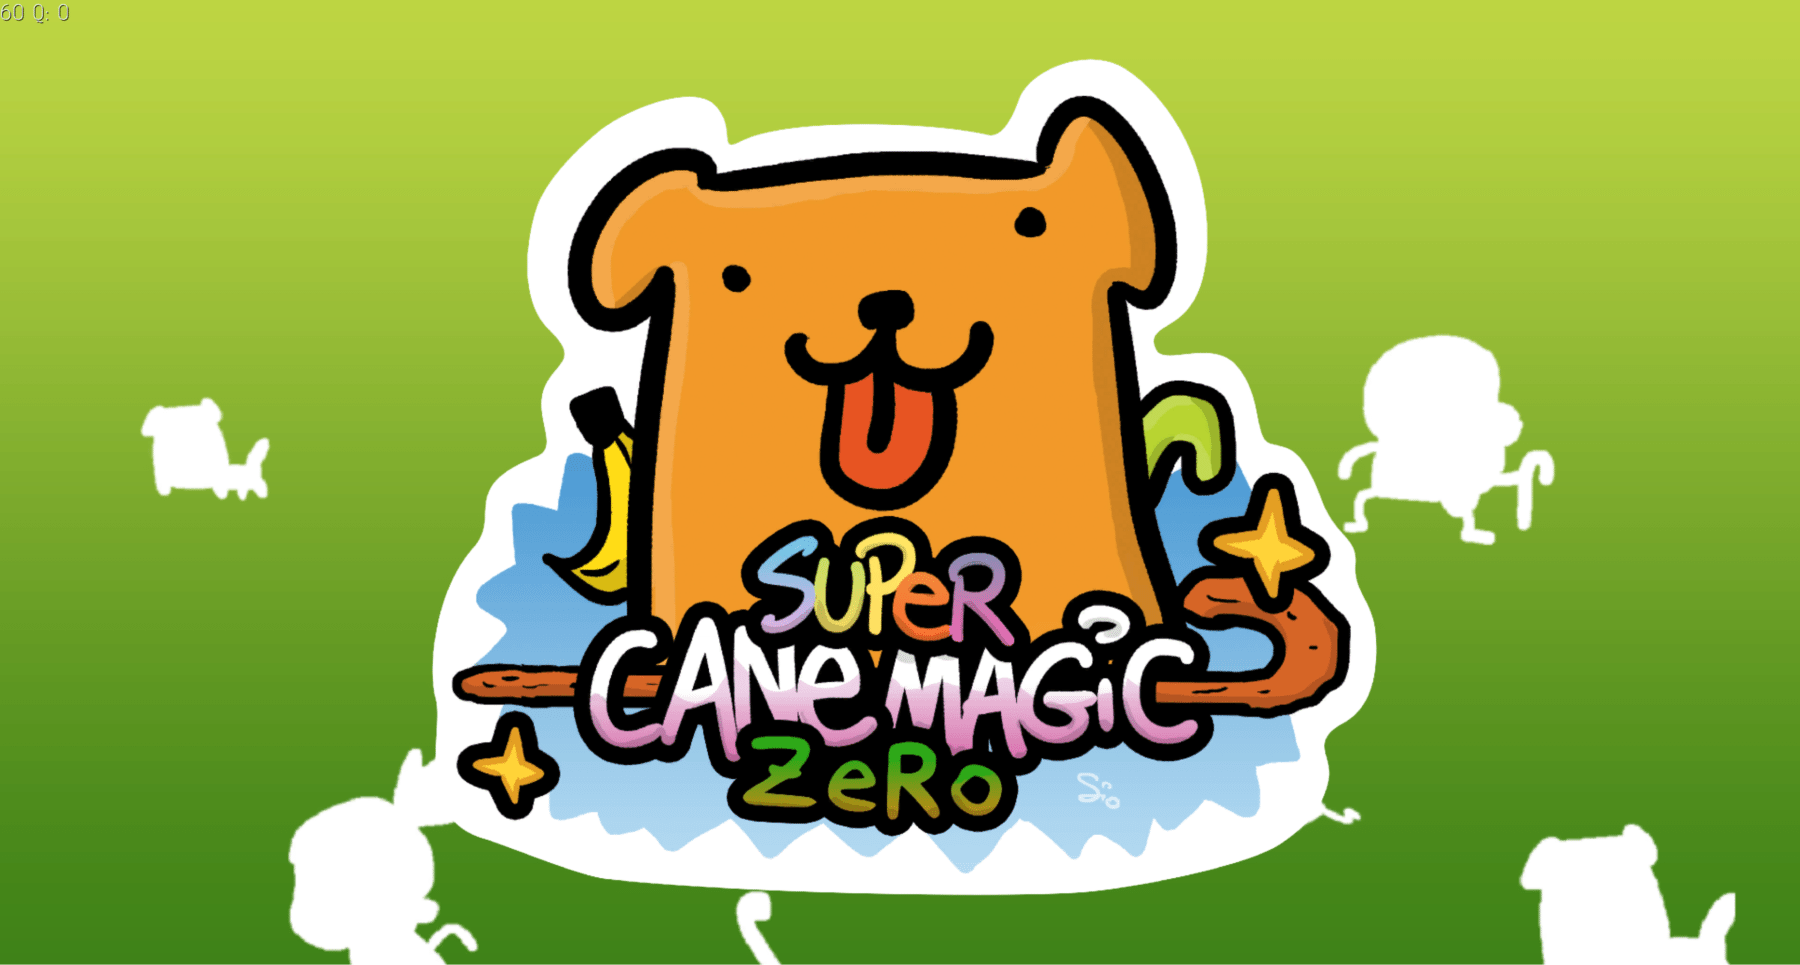 Super Cane Magic ZERO anunciado para Nintendo Switch